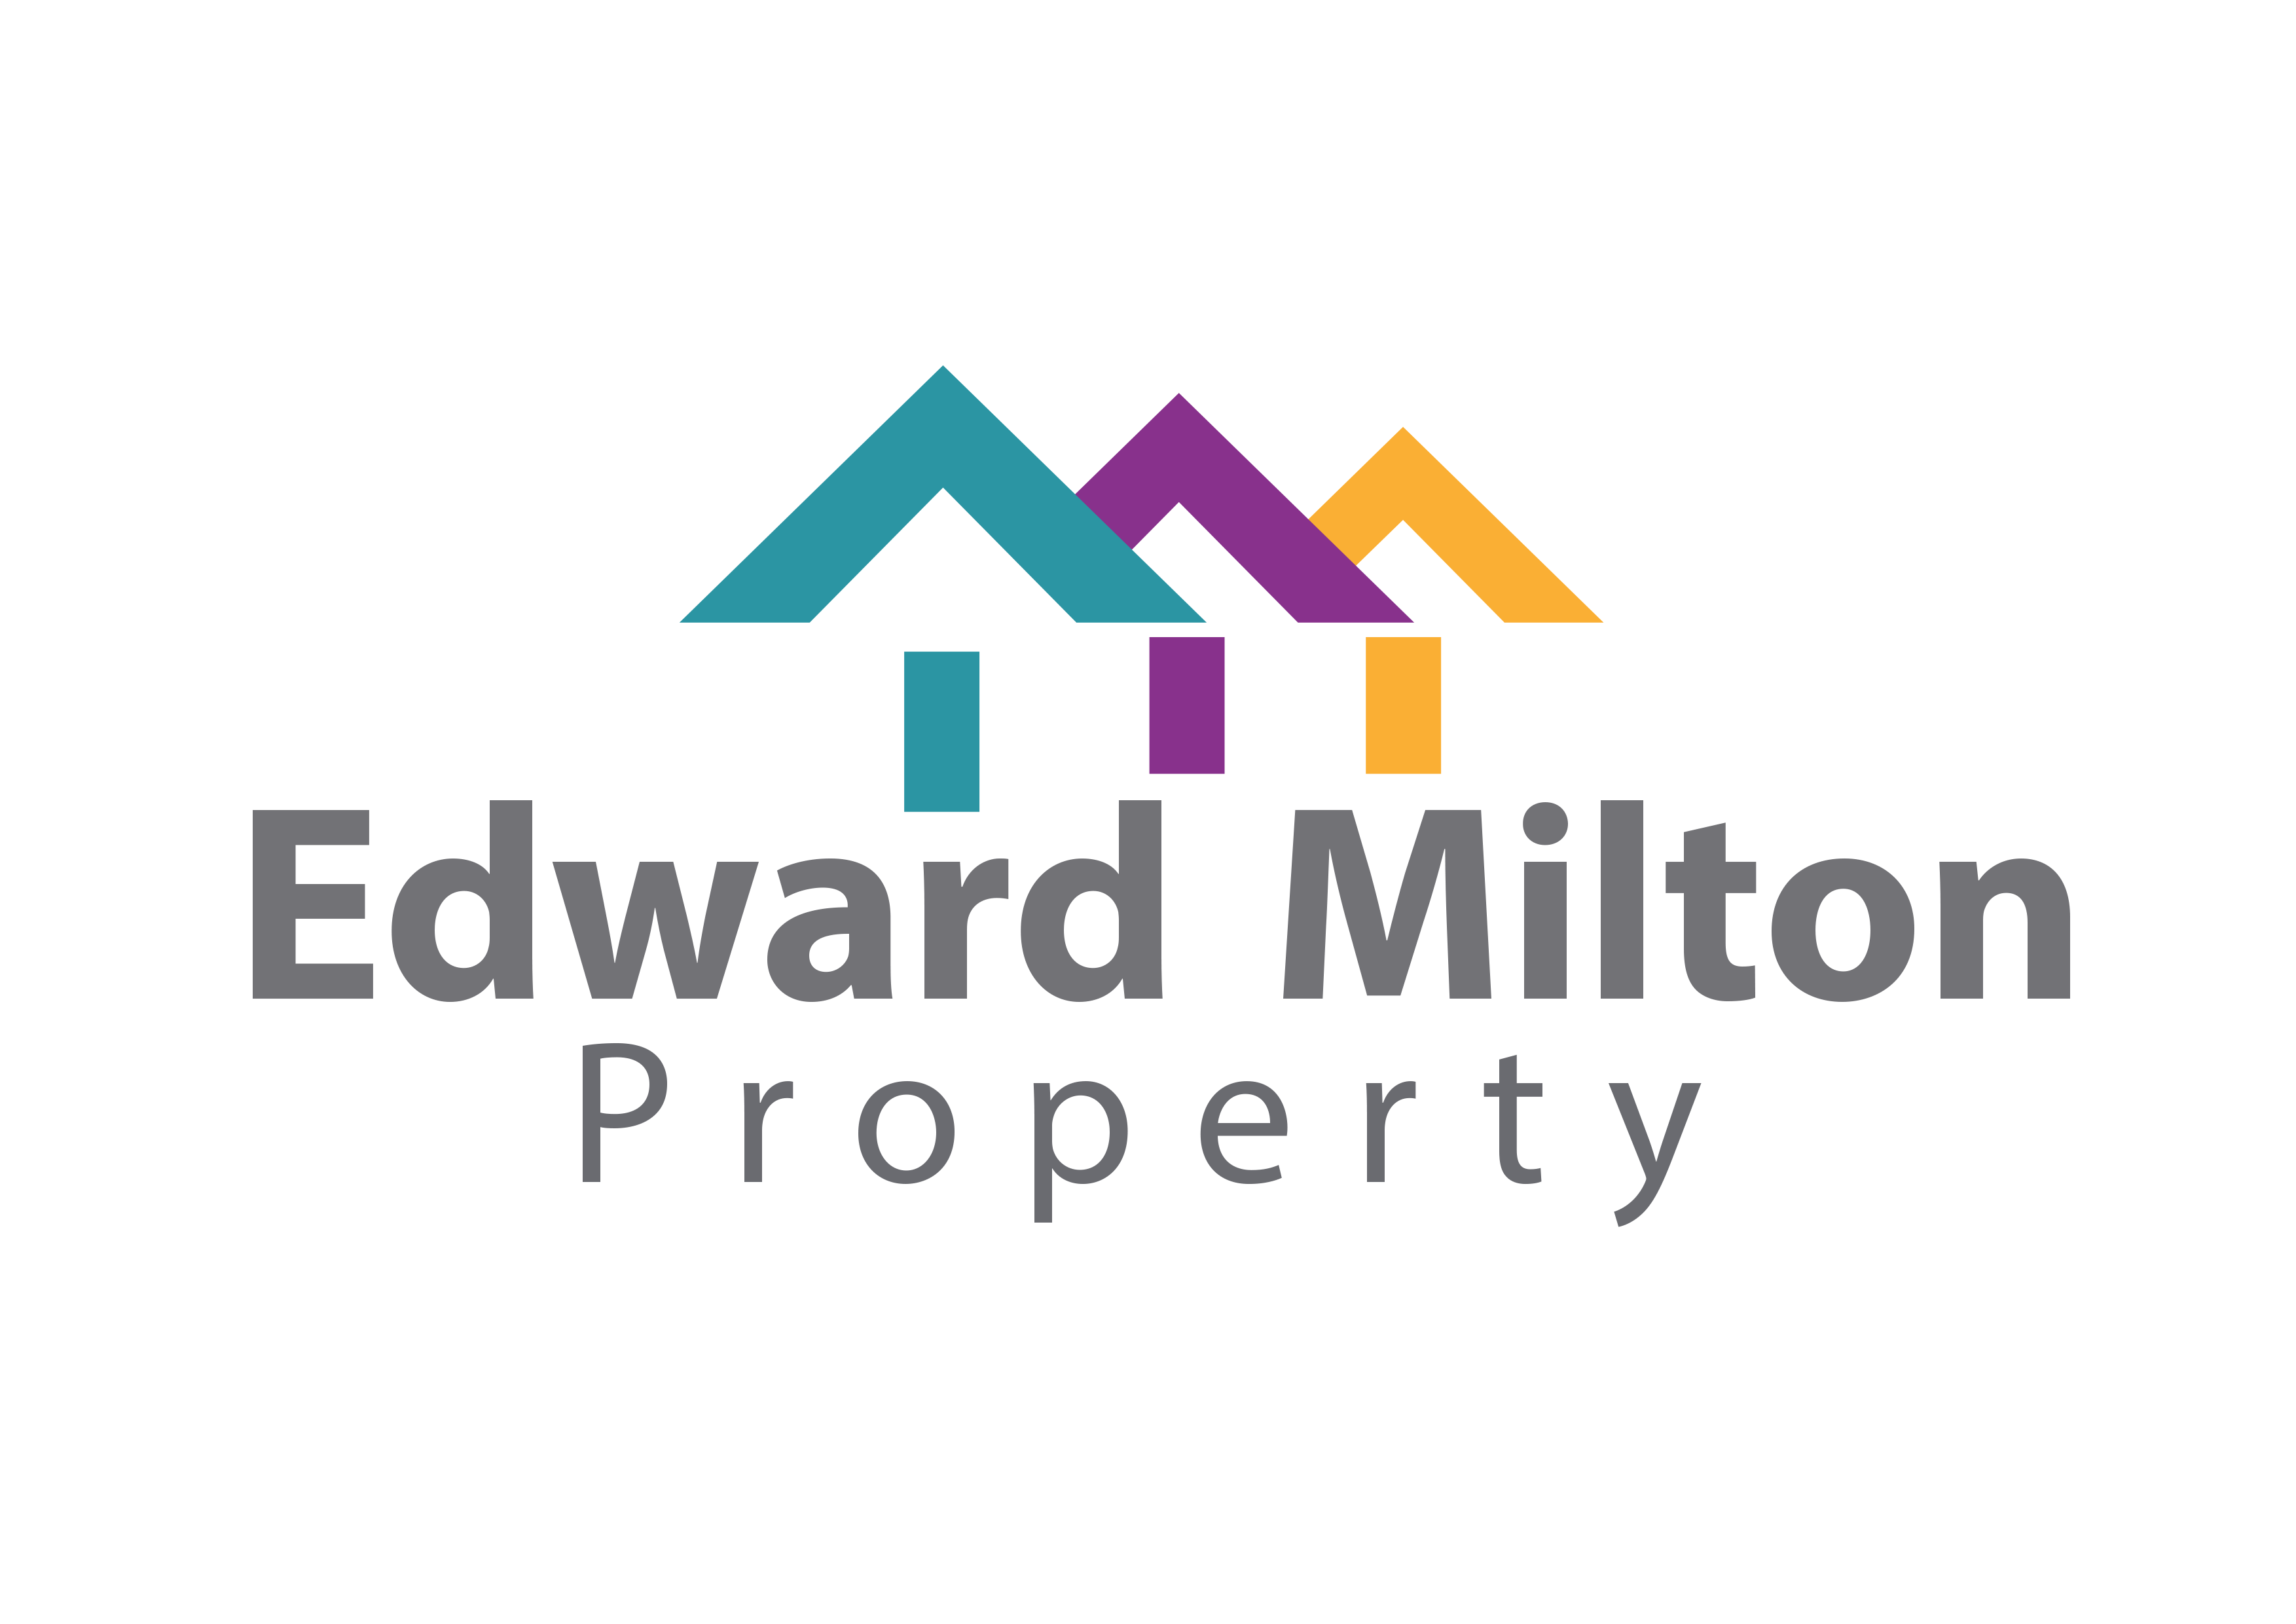 Edward Milton Property